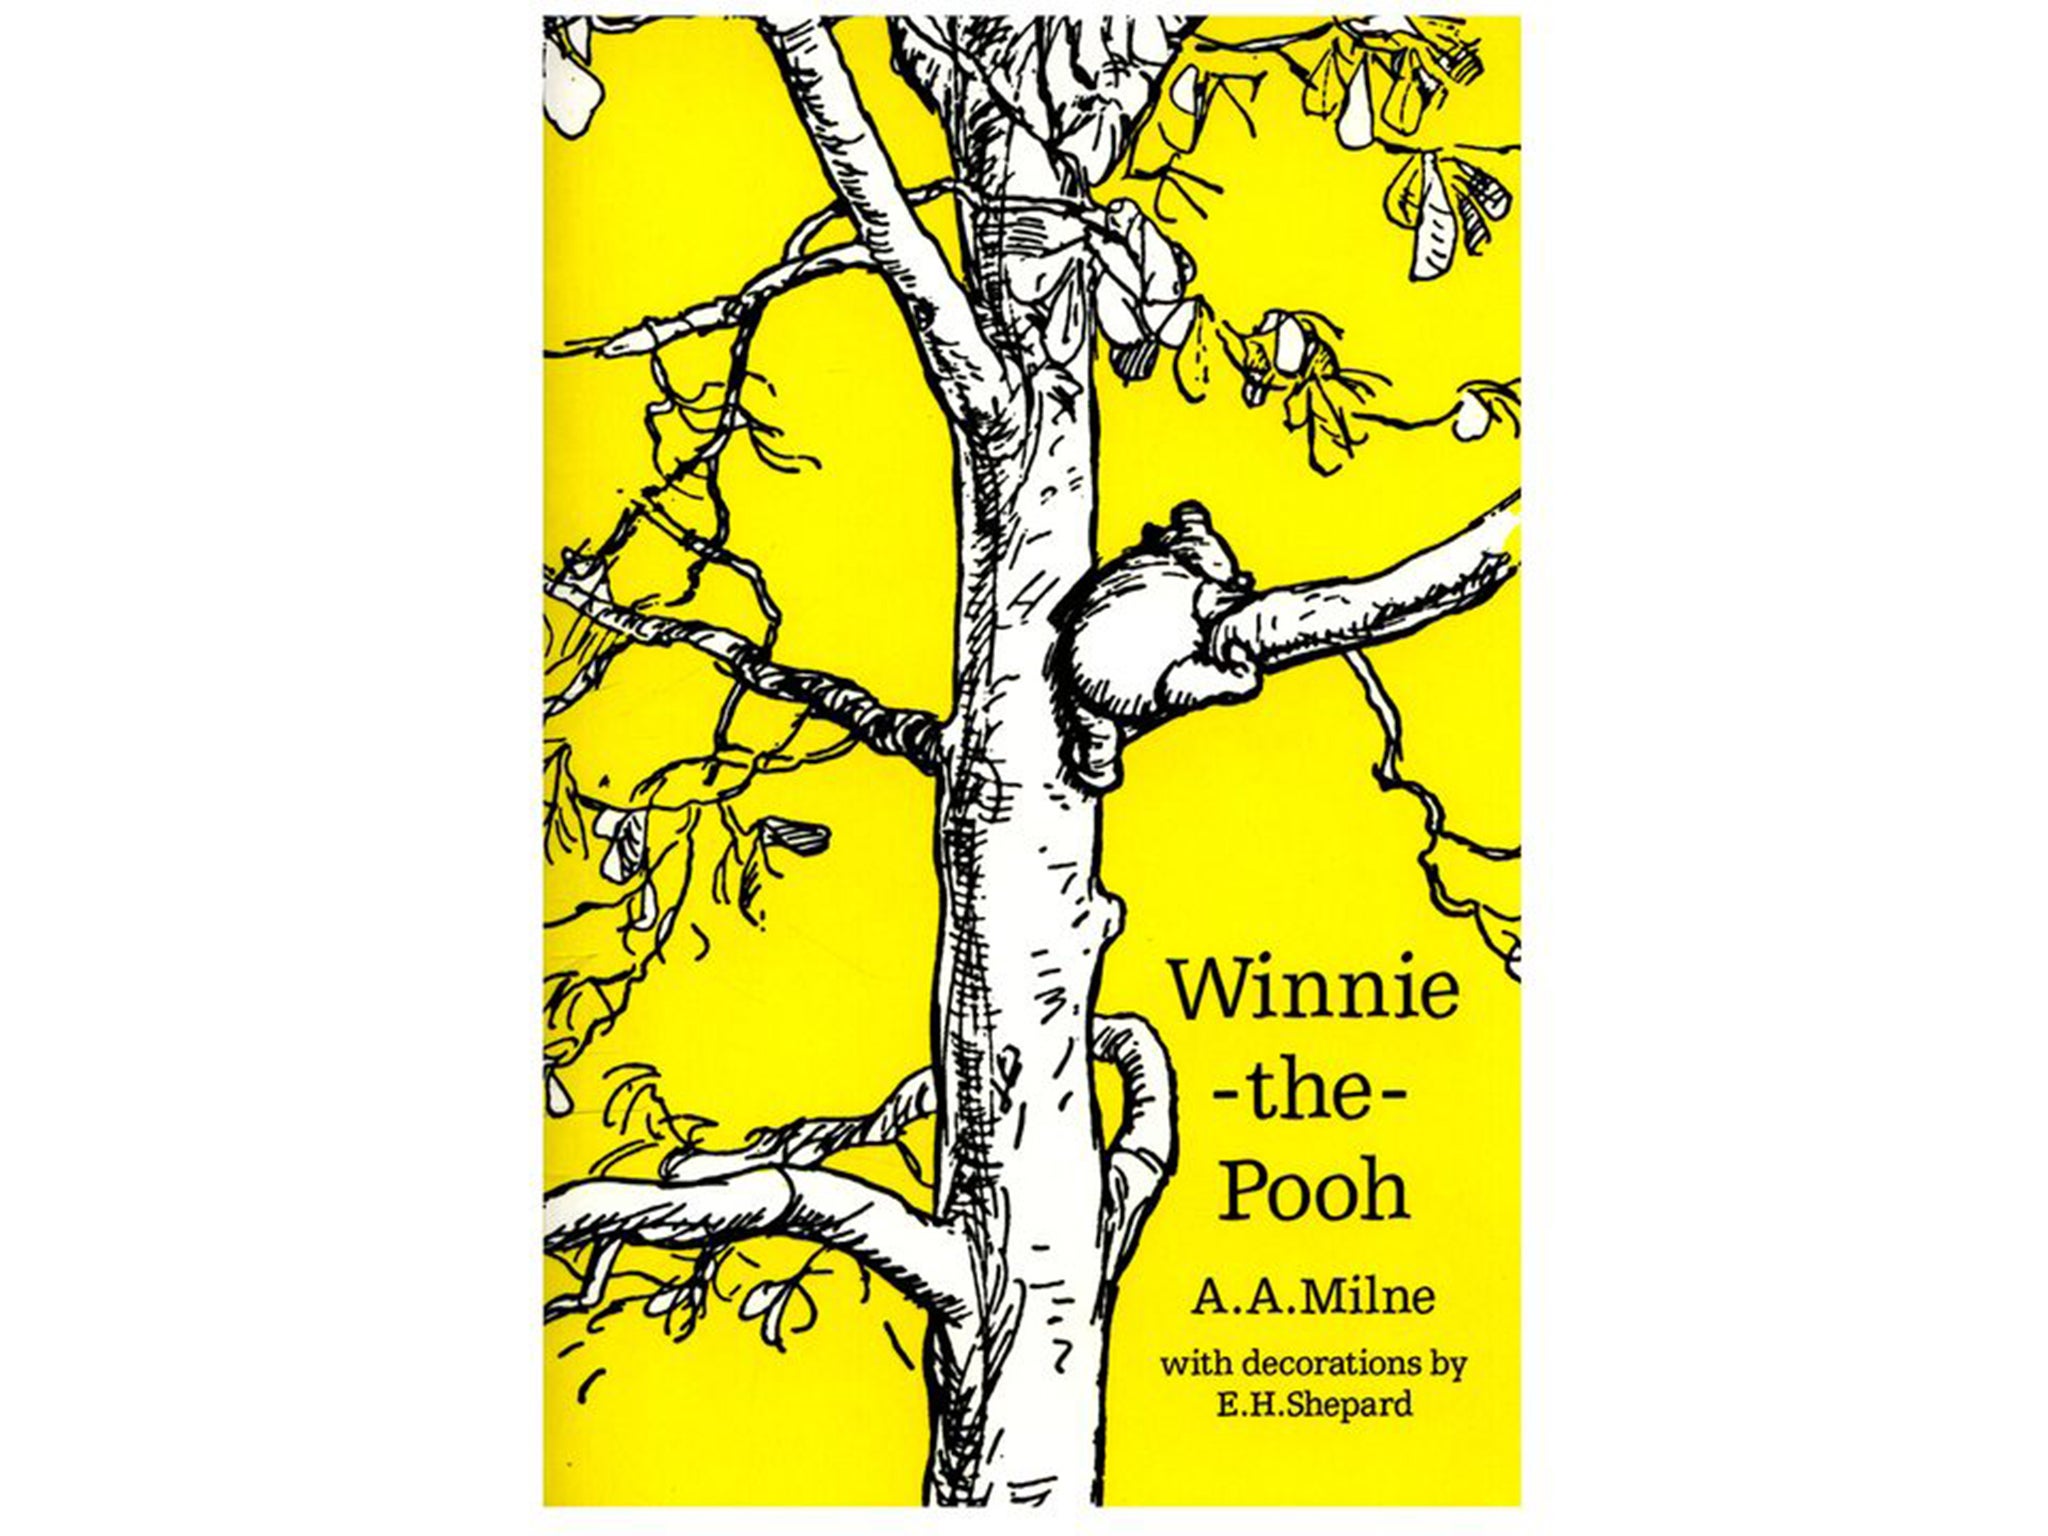 winnie-the-pooh-indybest-a-a-milne-birthday.jpg